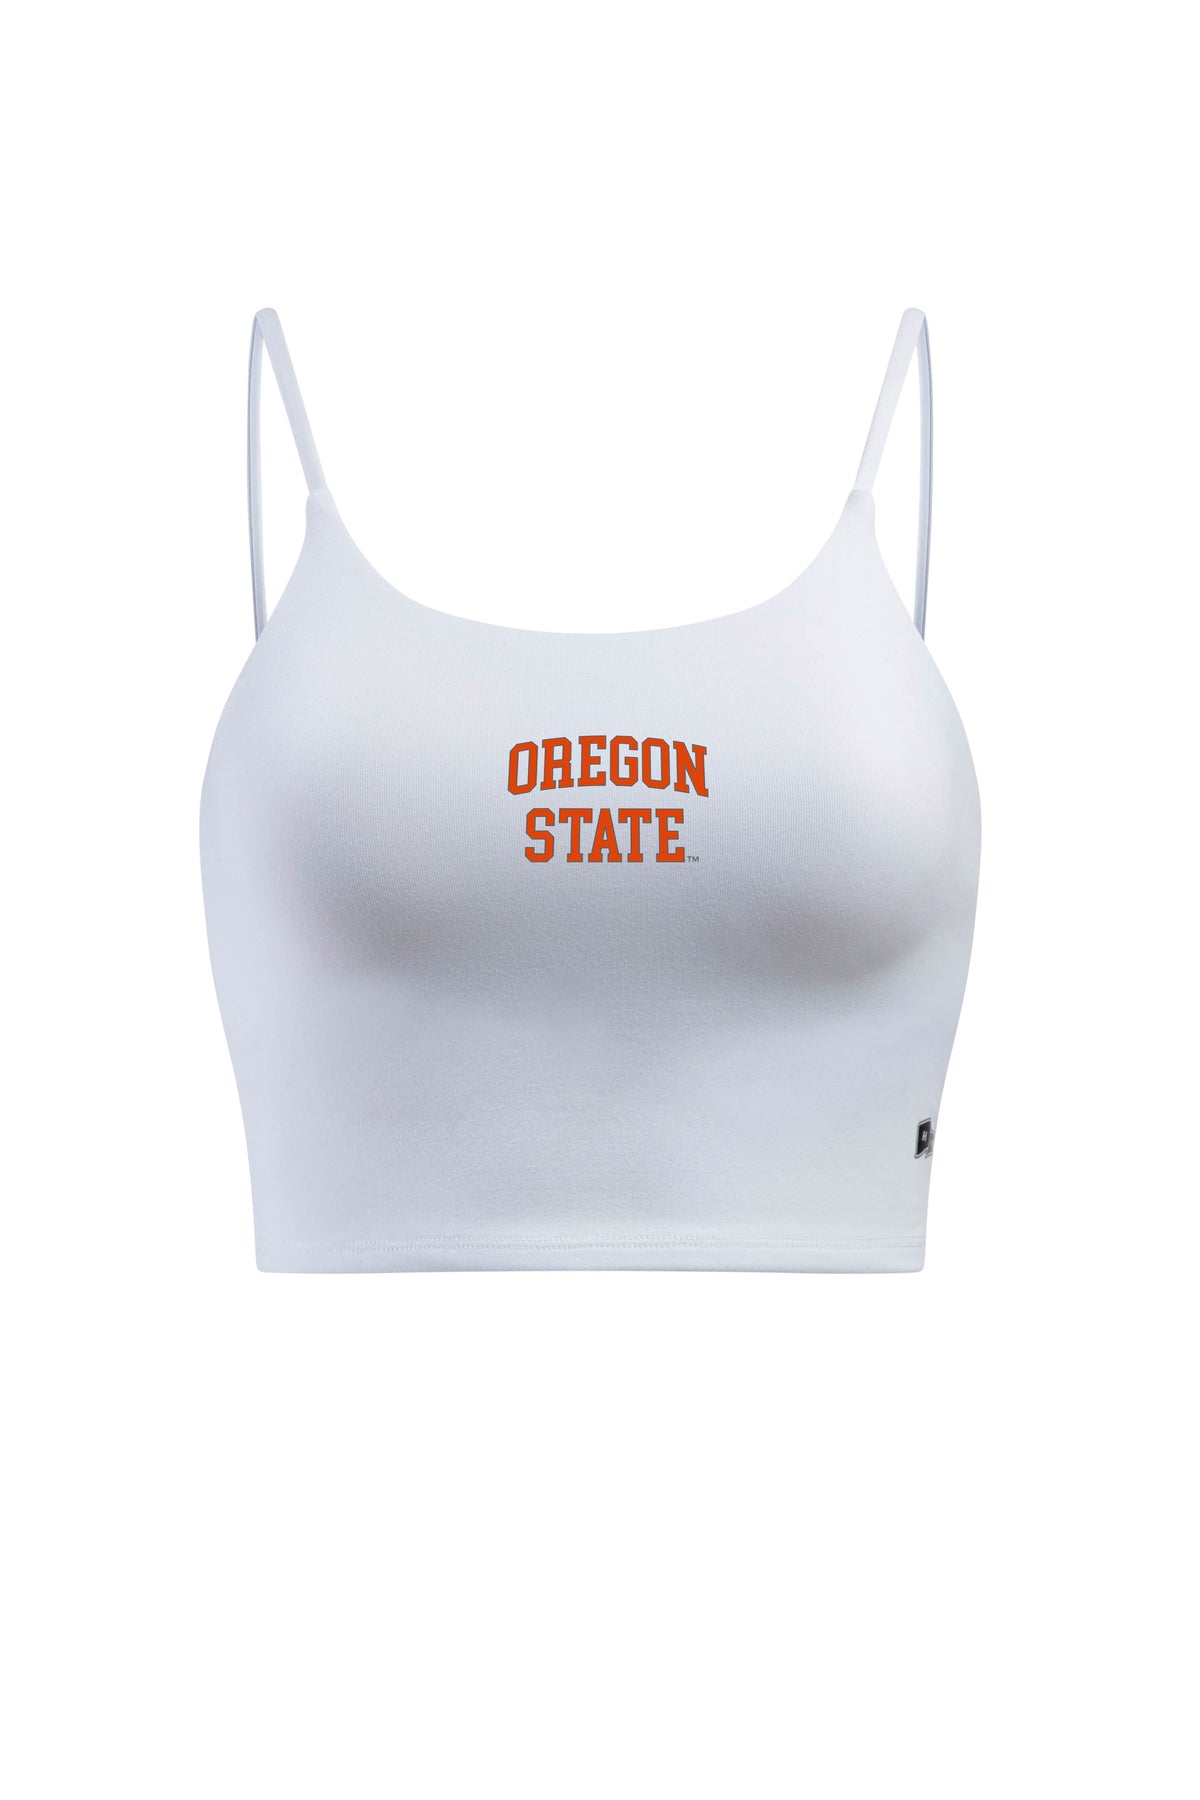 Oregon State University Bra Tank Top